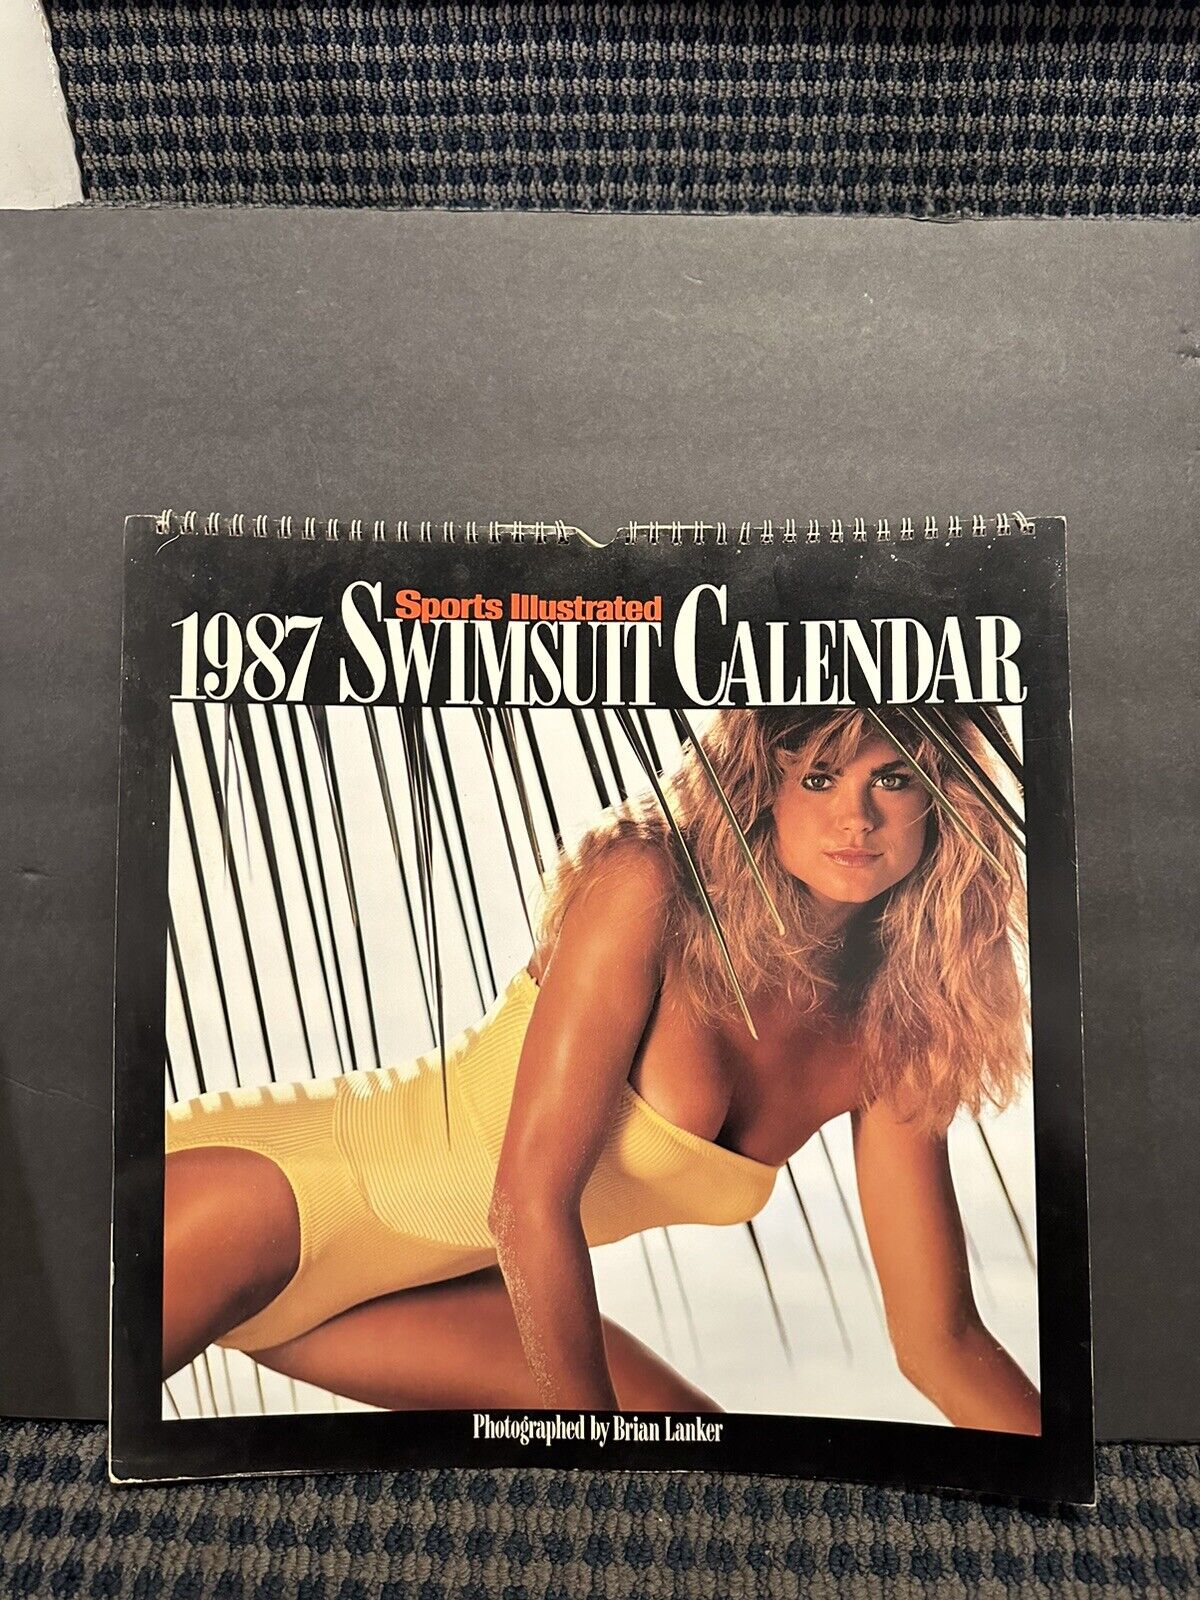 1987 Sports Illustrated Swimsuit Calendar, Brian Lanker Photographer (MH624)